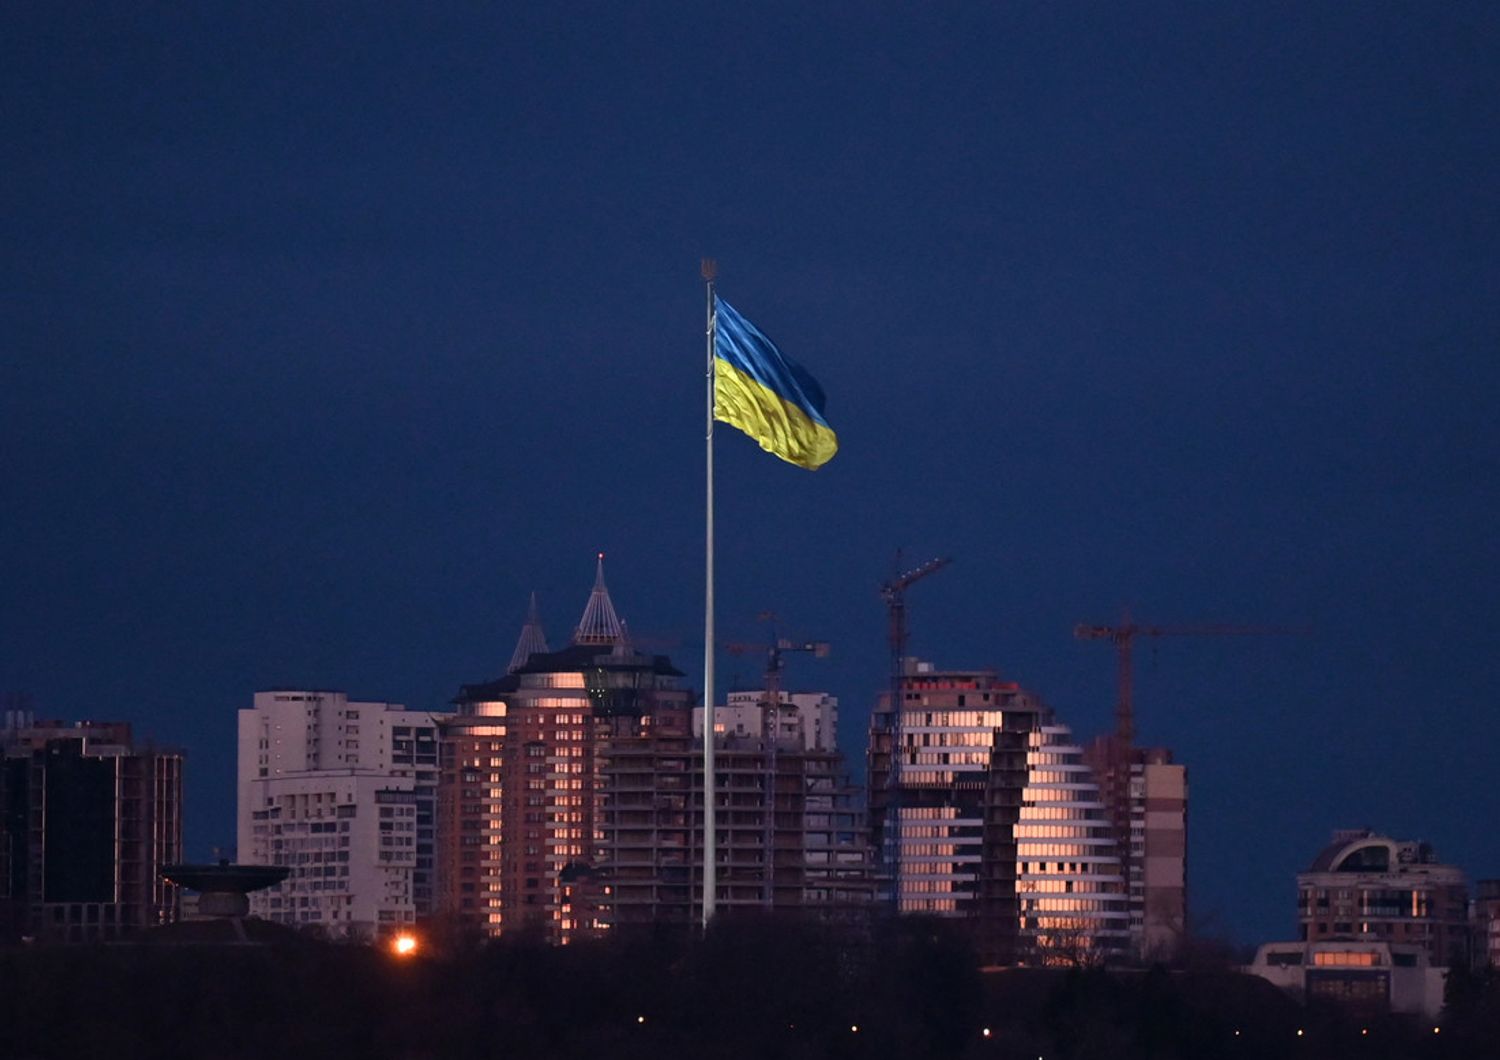 Kiev, bandola sventola durante bombardamenti russi